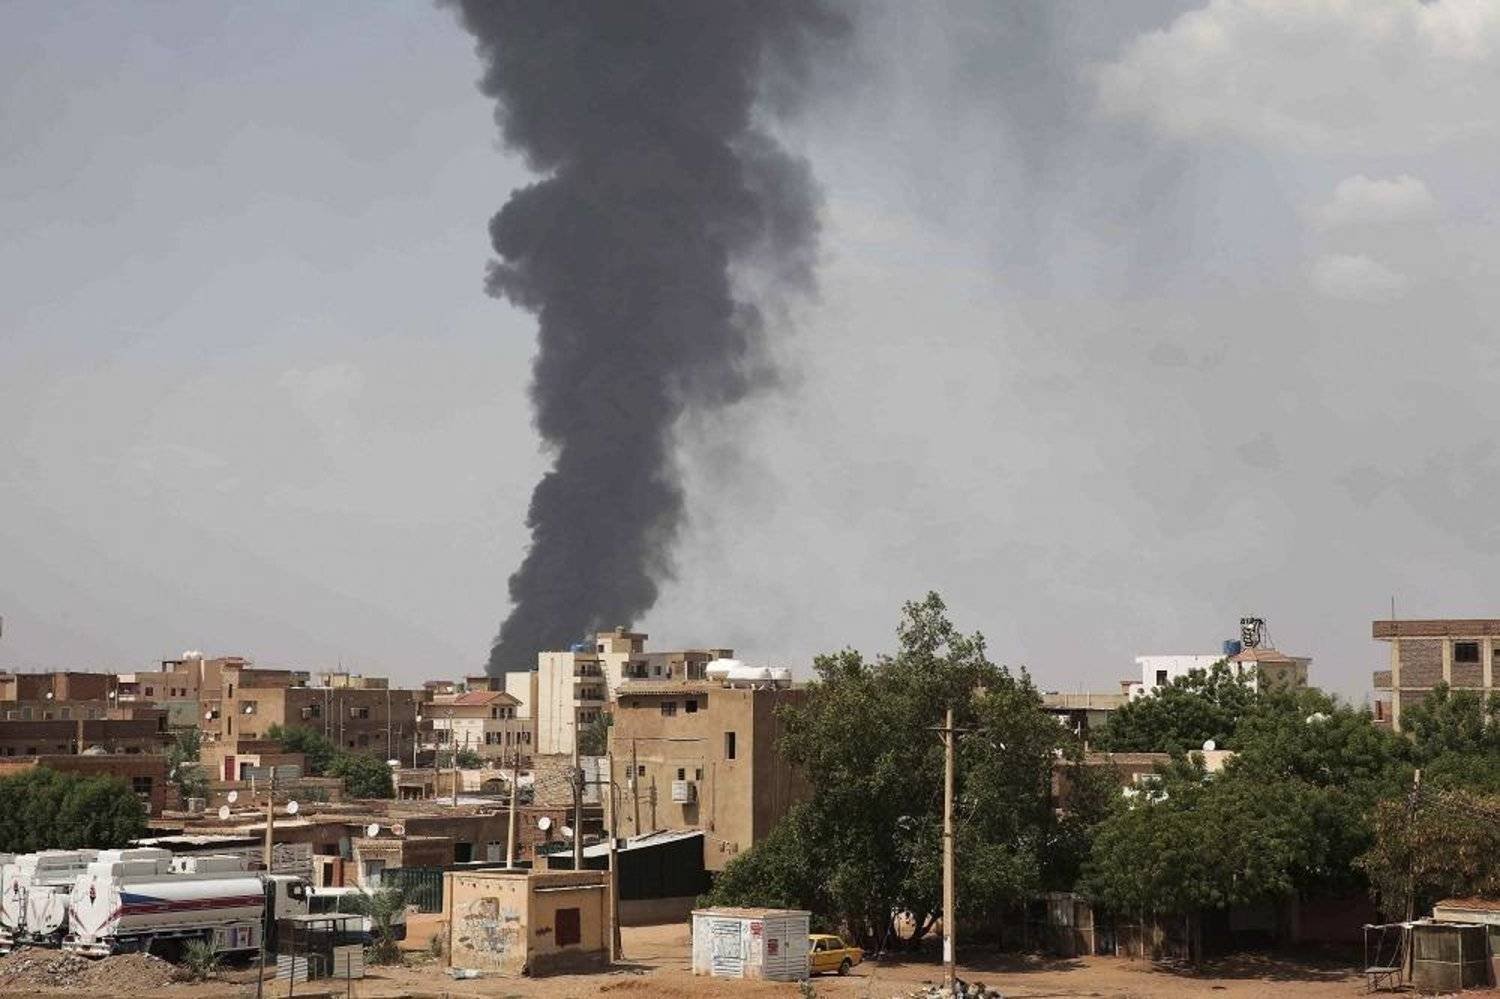 Paramilitary attack on Sudan village kills 28